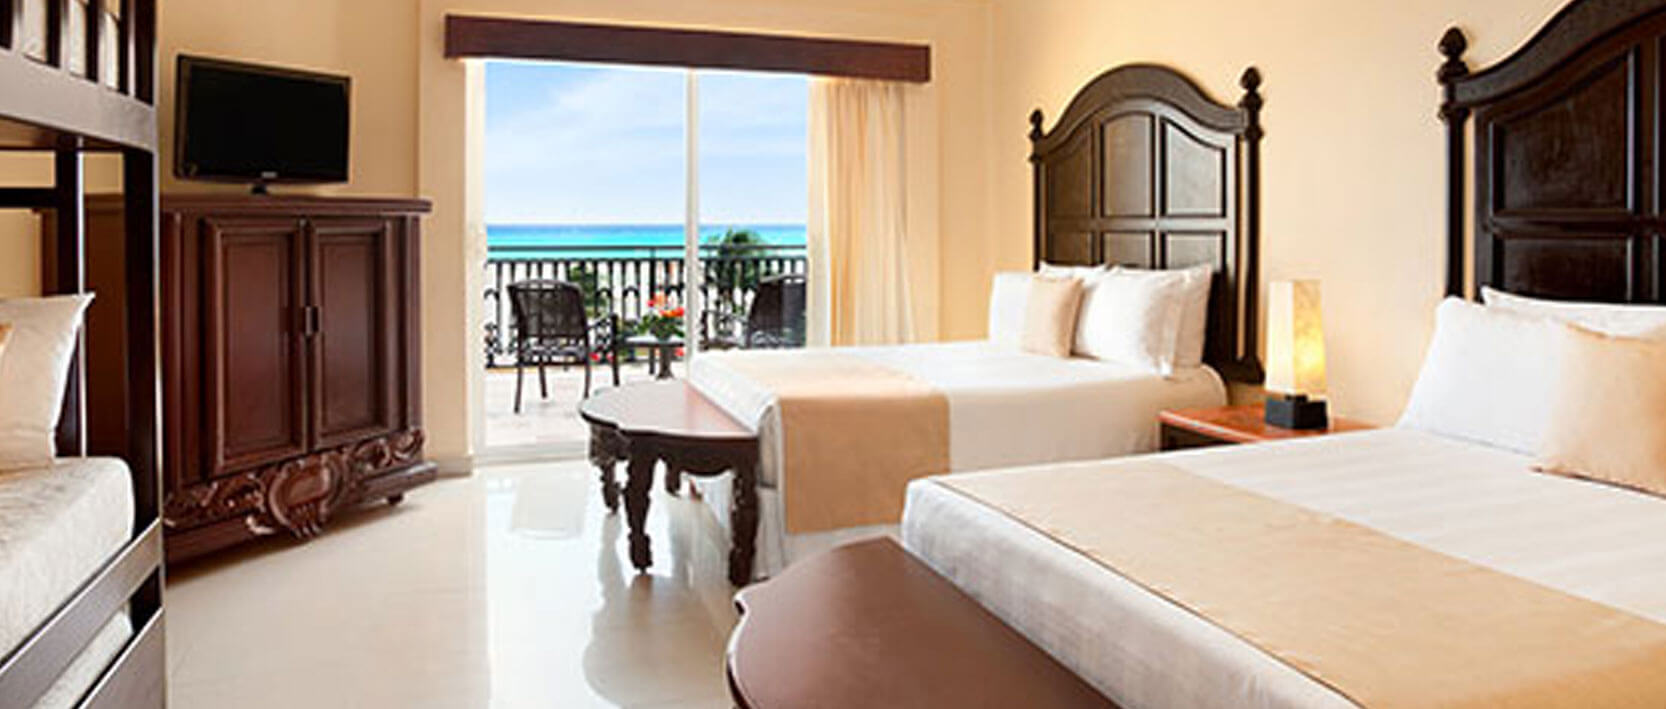 Playa del Carmen Accommodations - Oceanfront Family Junior Suite